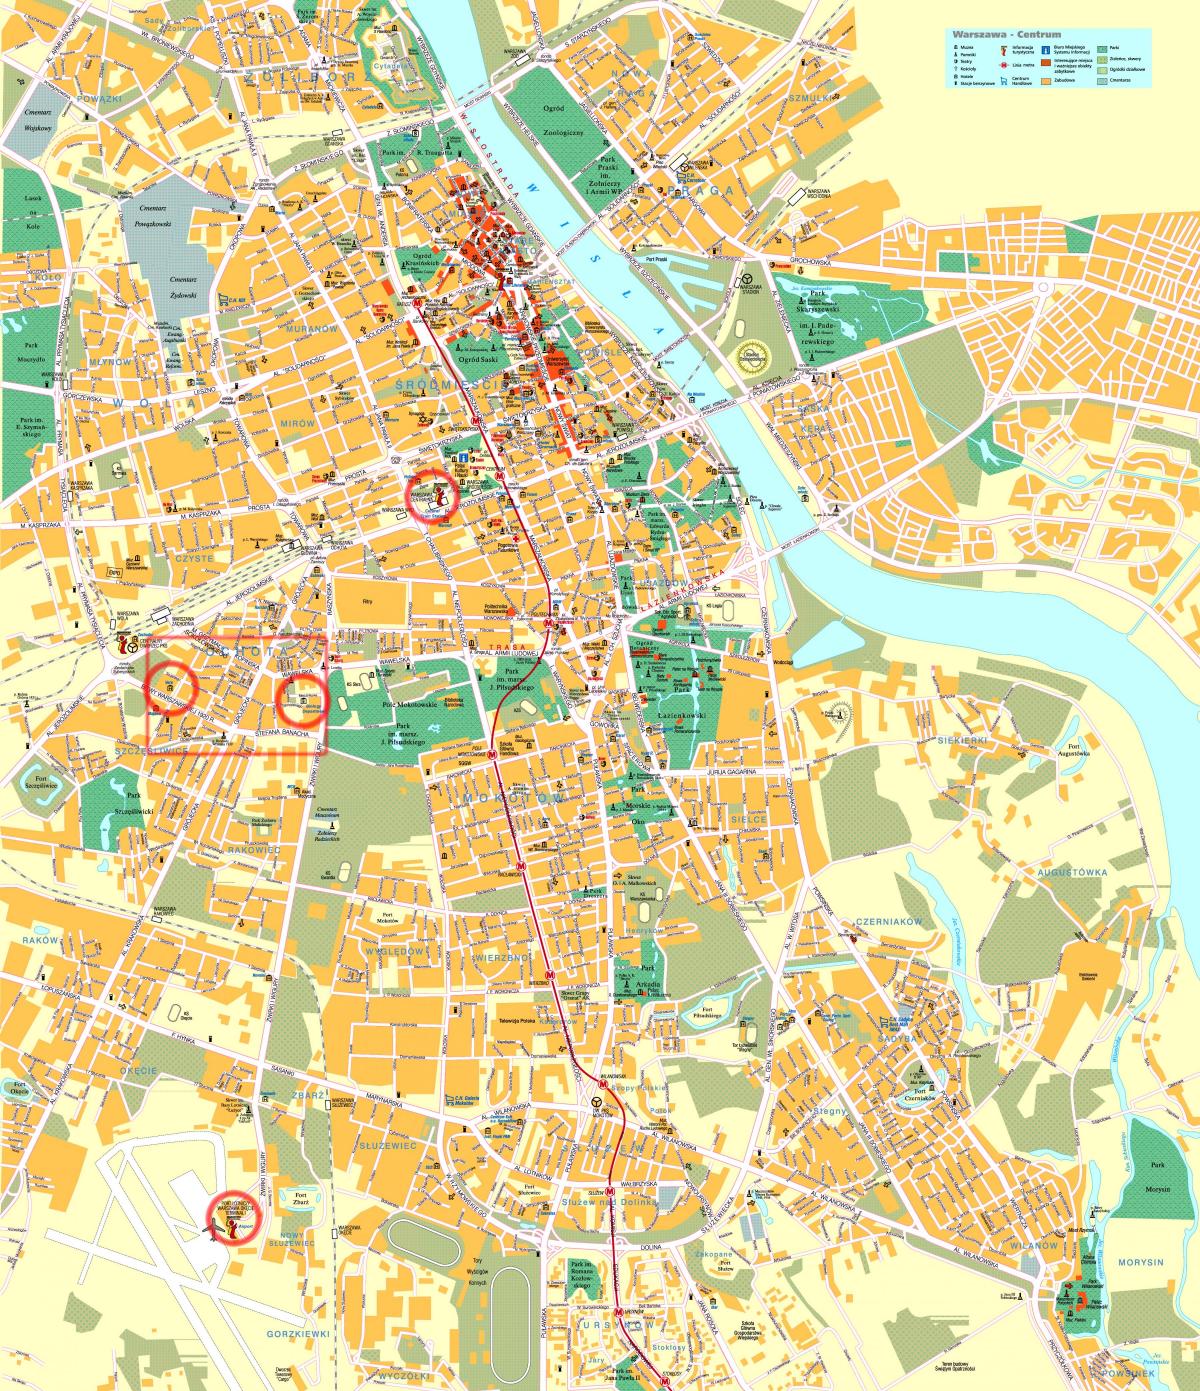 ulična mapa Varšave centar grada